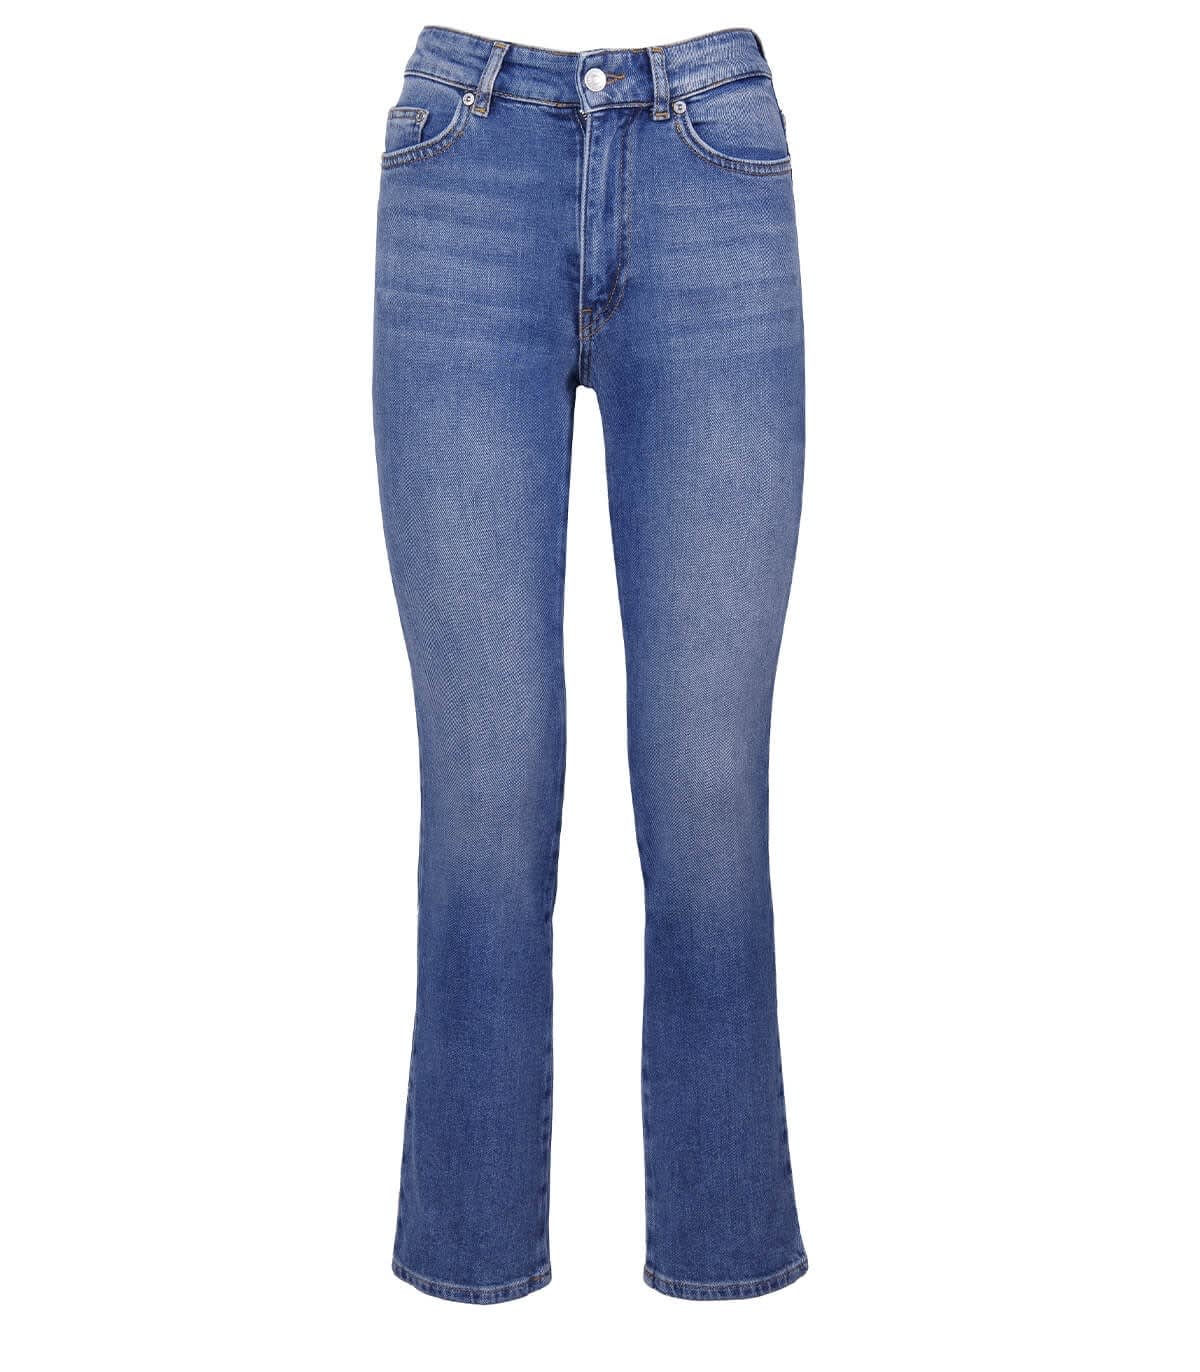 Chiara Ferragni Eyestar Light Blue Slim Fit Jeans